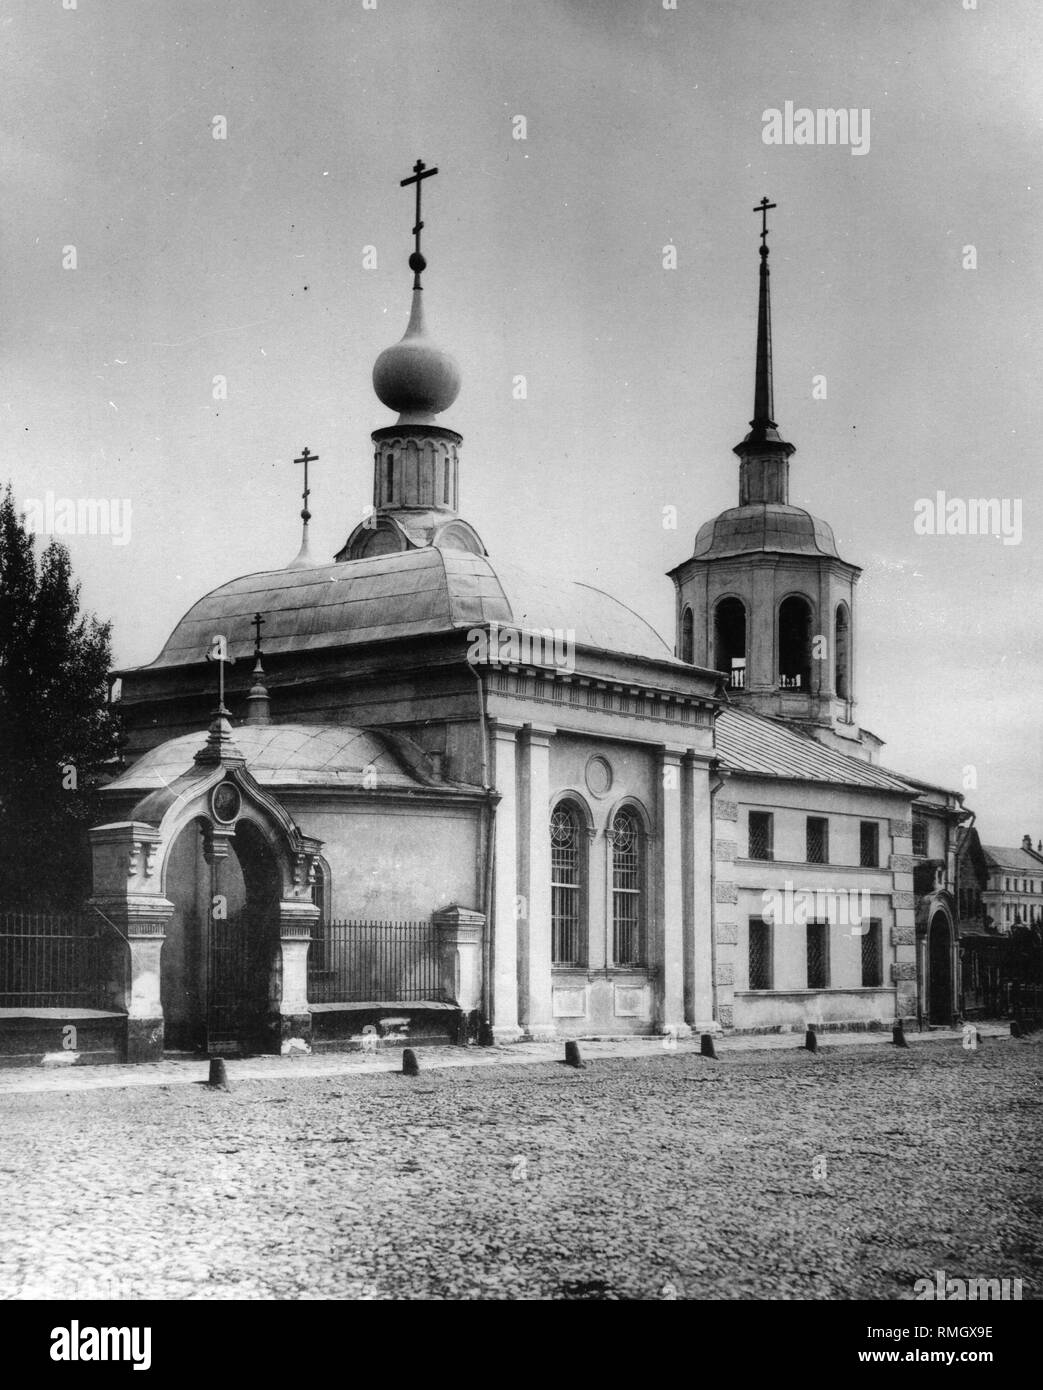 The Dormition Church on Ostozhenka in Moscow. Albumin Photo Stock Photo ...